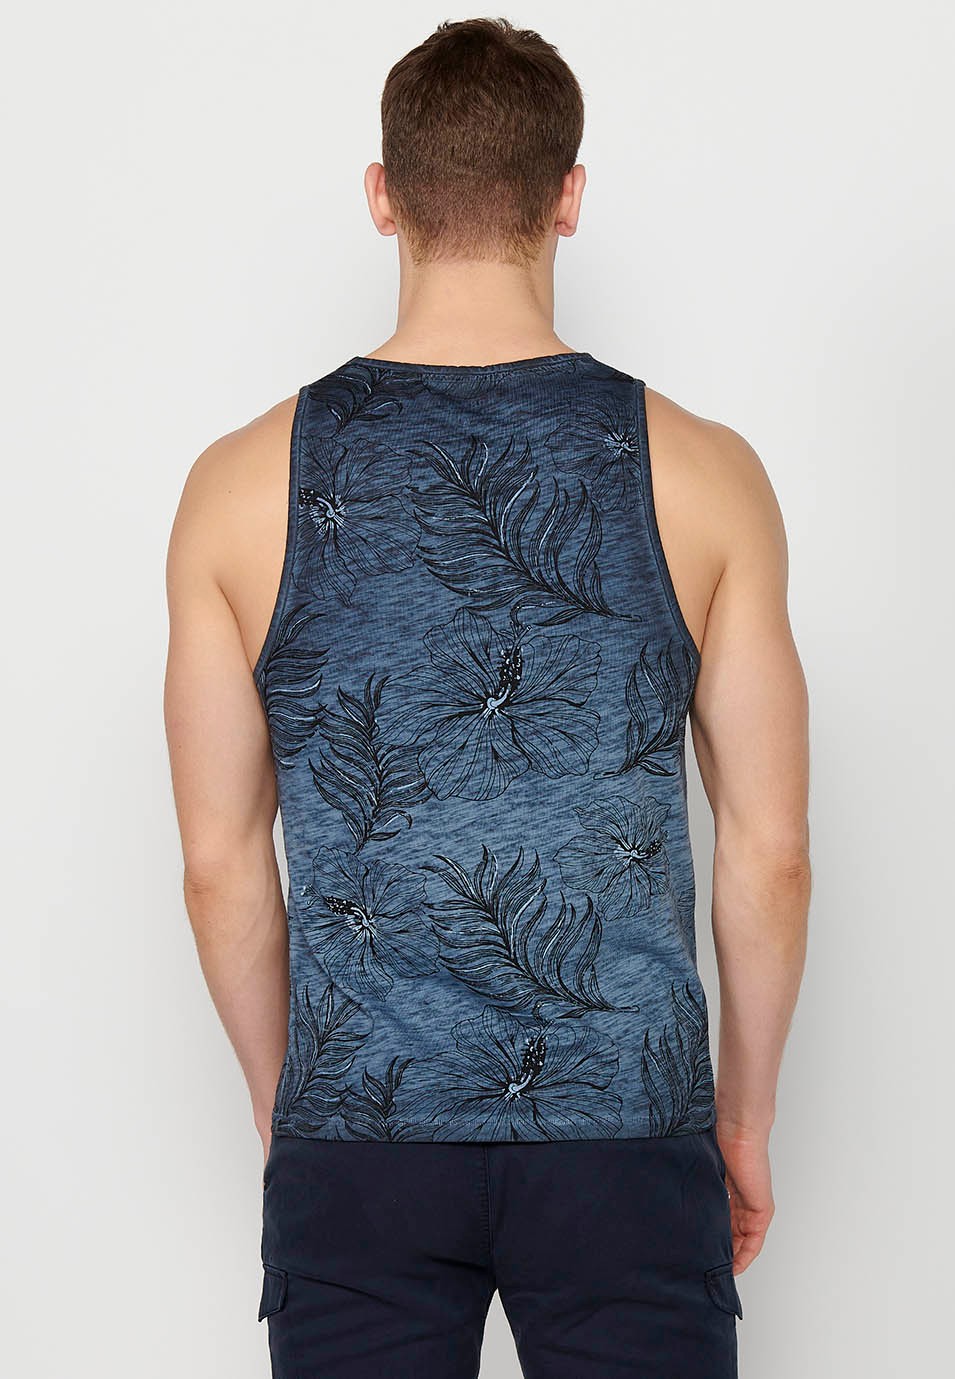 Tank top, floral print, blue color for men